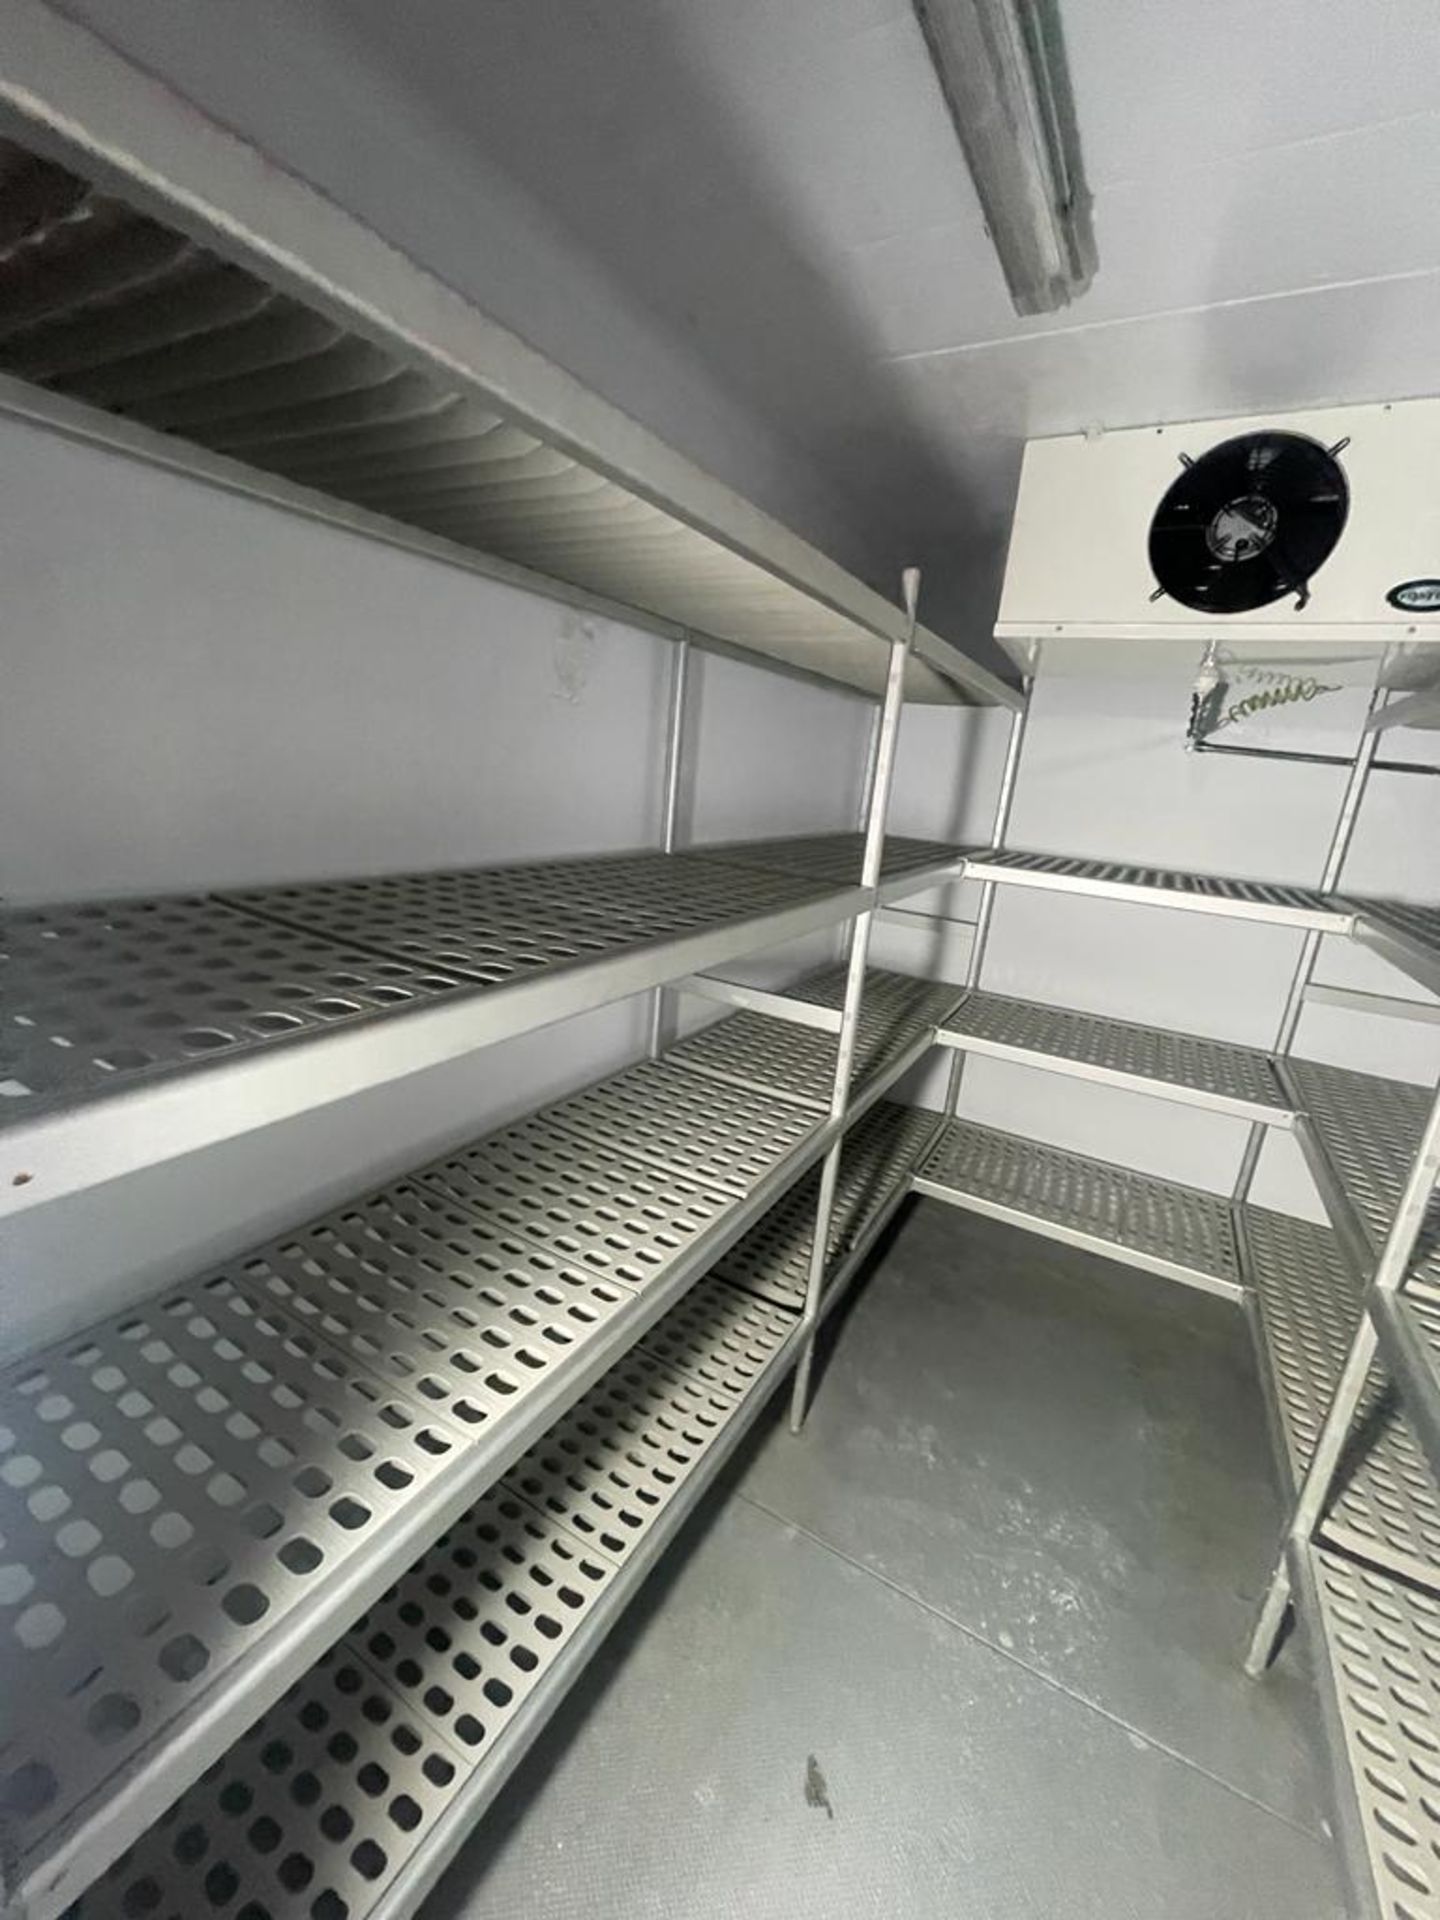 1 x Aluminium Cold Room Shelving Featuring Perforated Hygenic Shelves - U Shape Configuration - Image 3 of 4